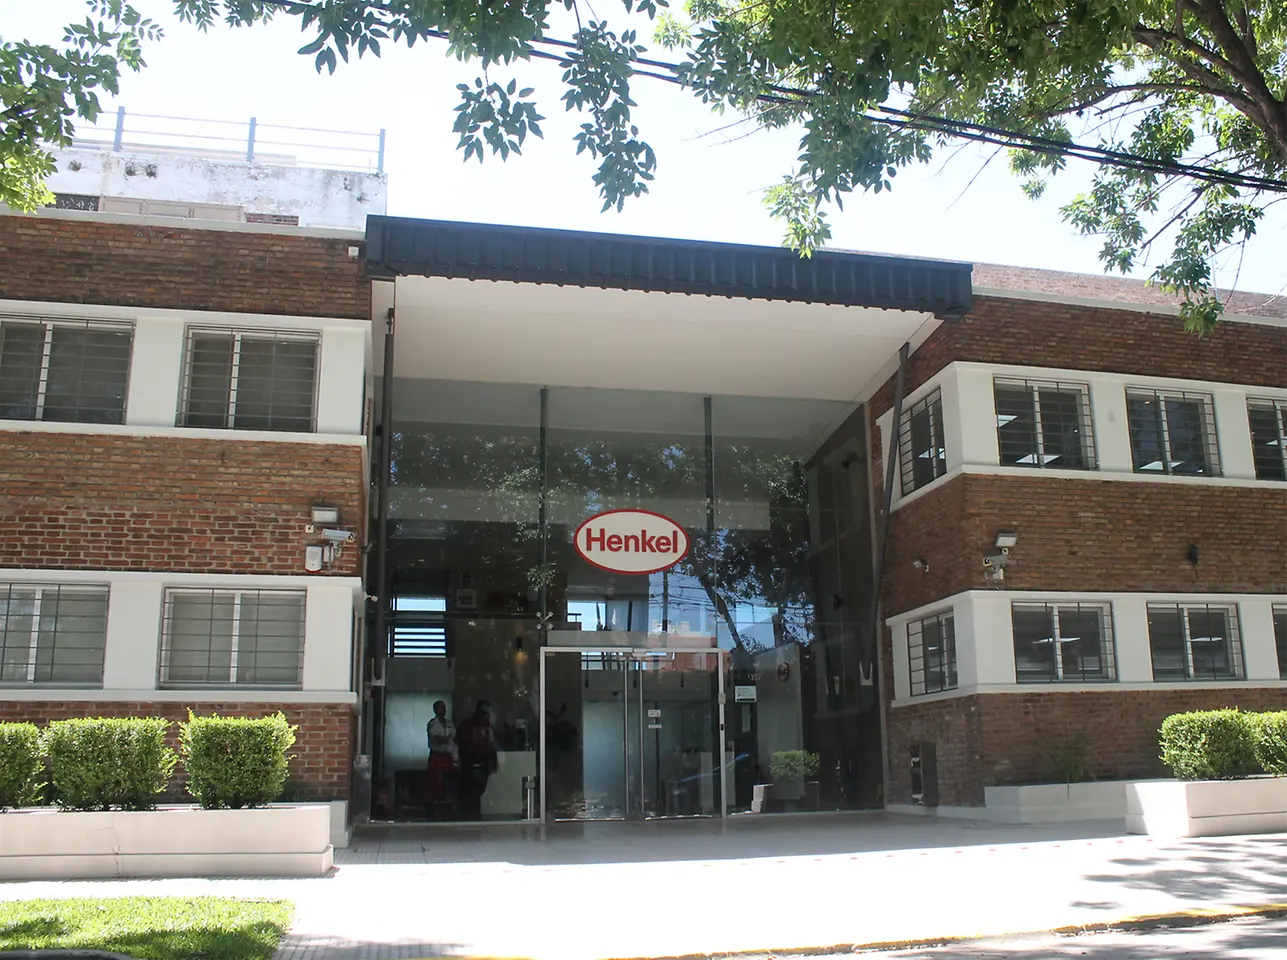 Edificio Henkel Argentina.